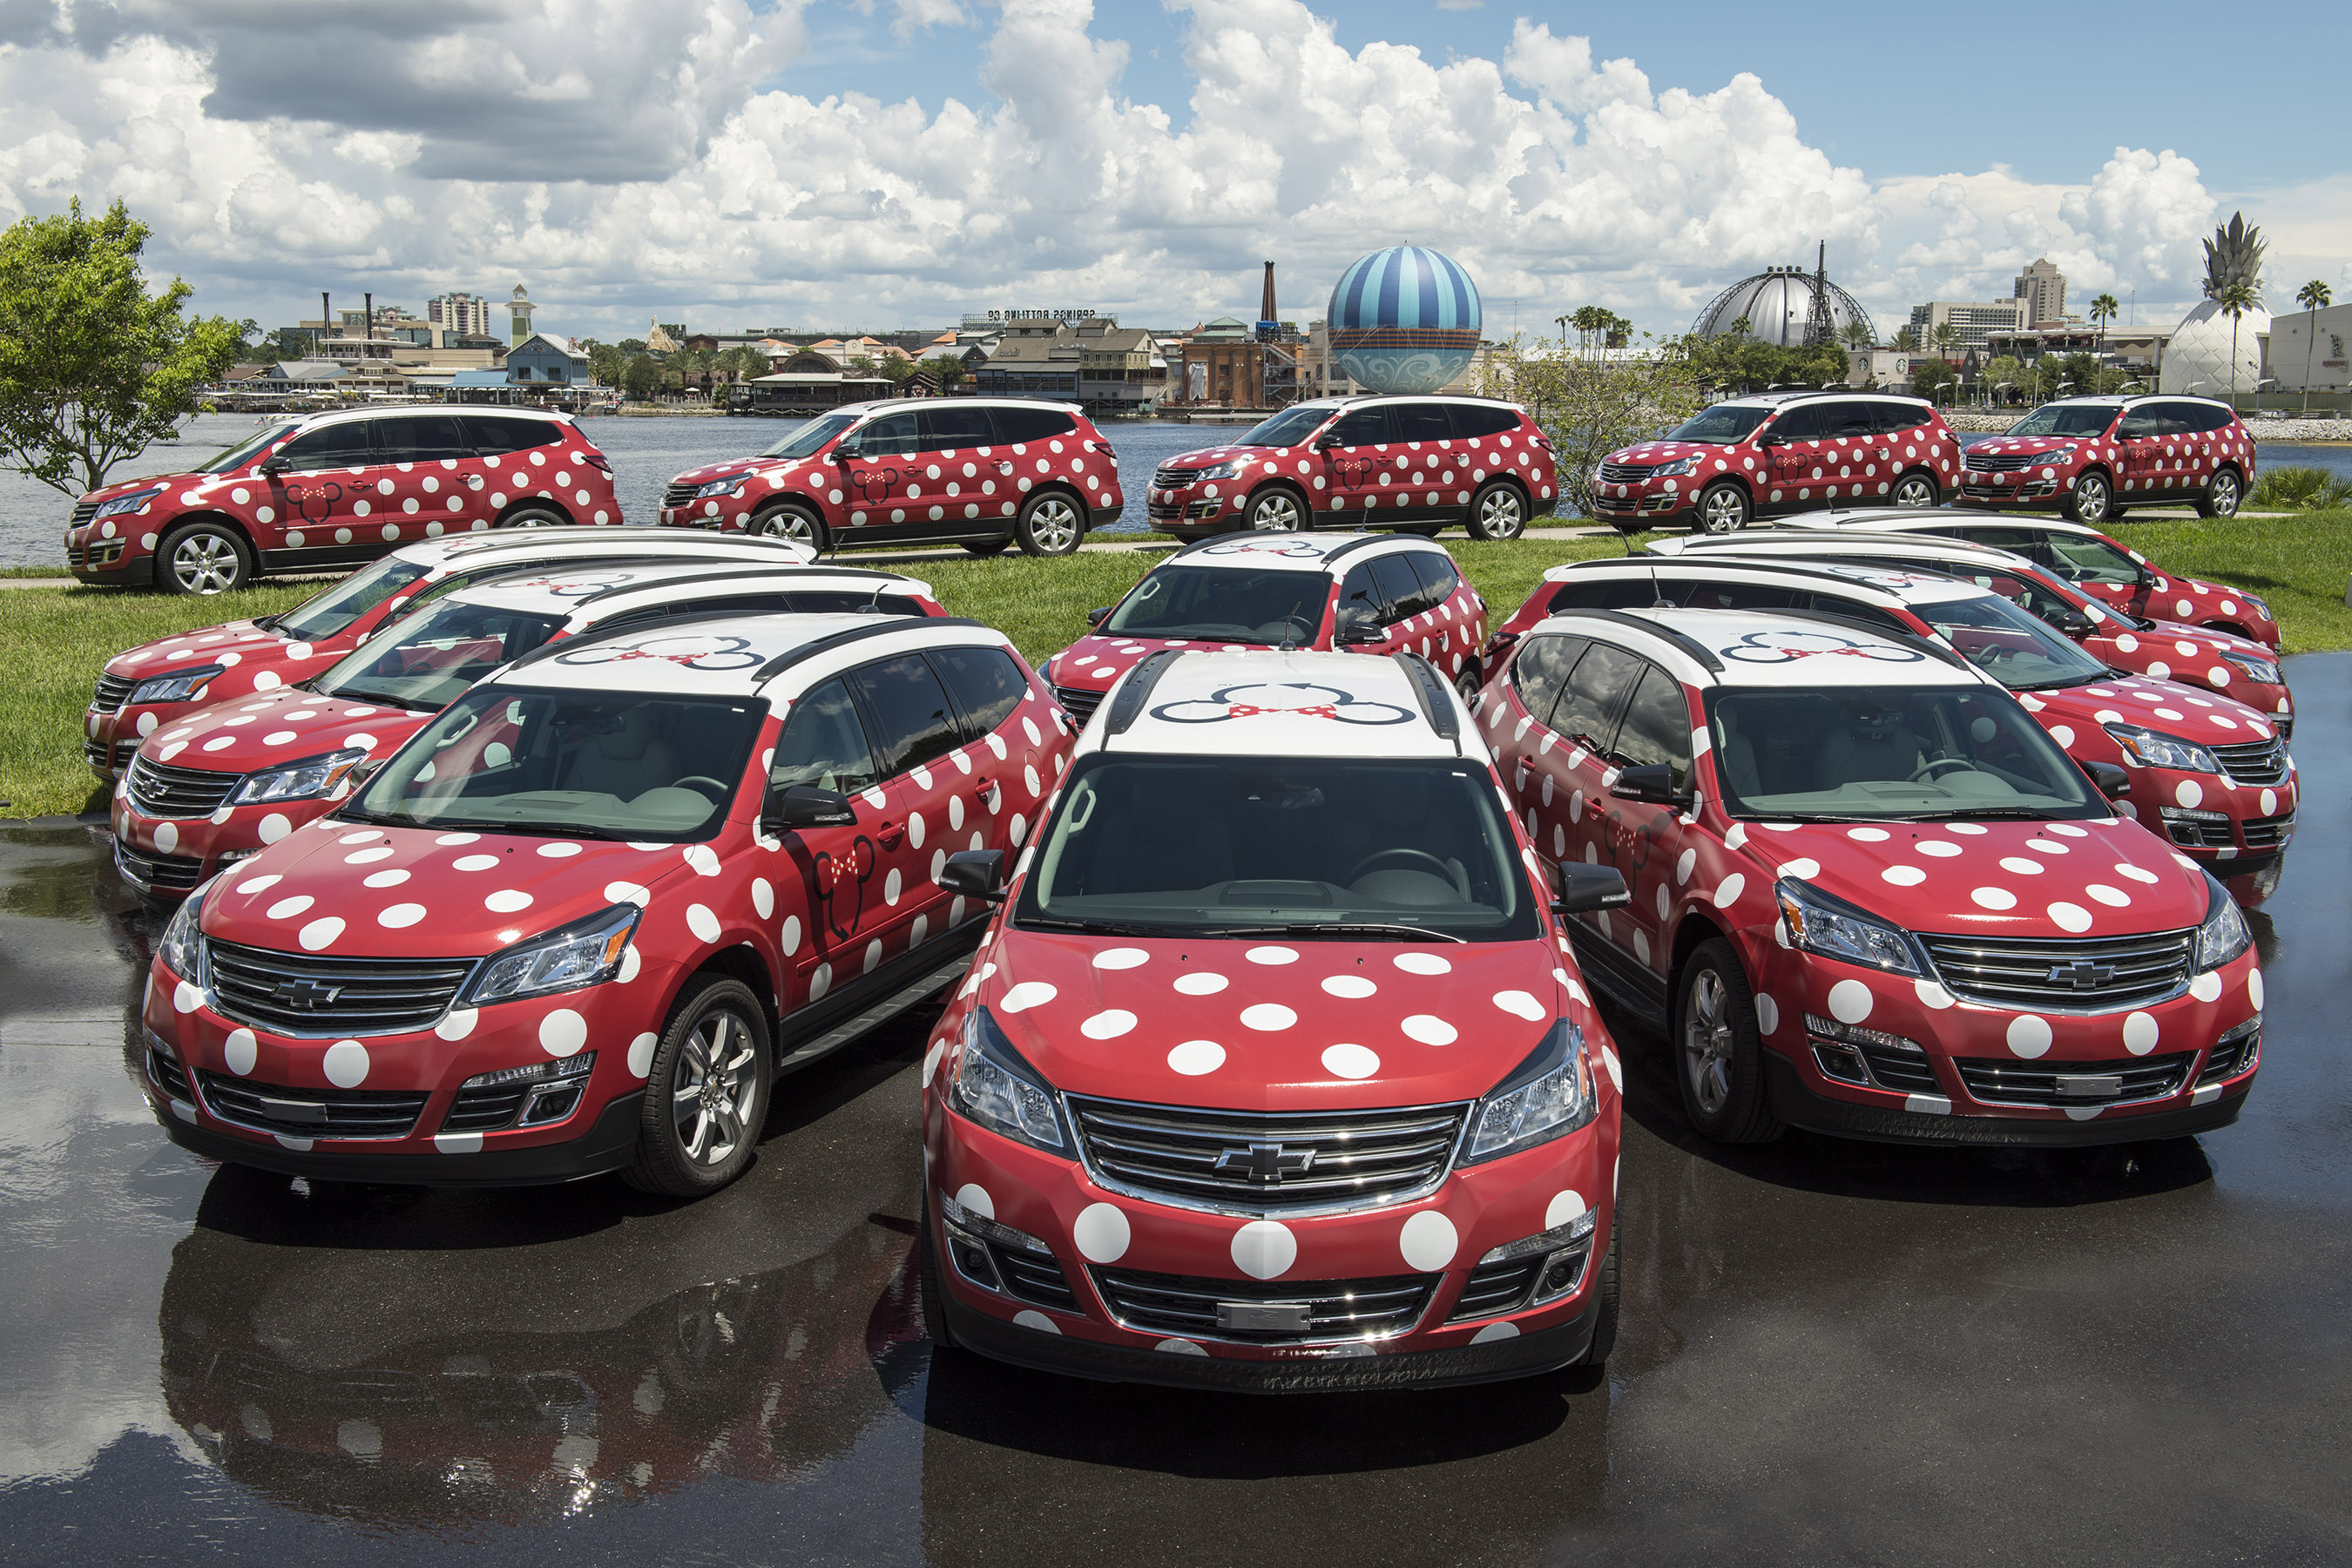 Featured image for “Minnie Van Service Expands Across Walt Disney World Resort Property”